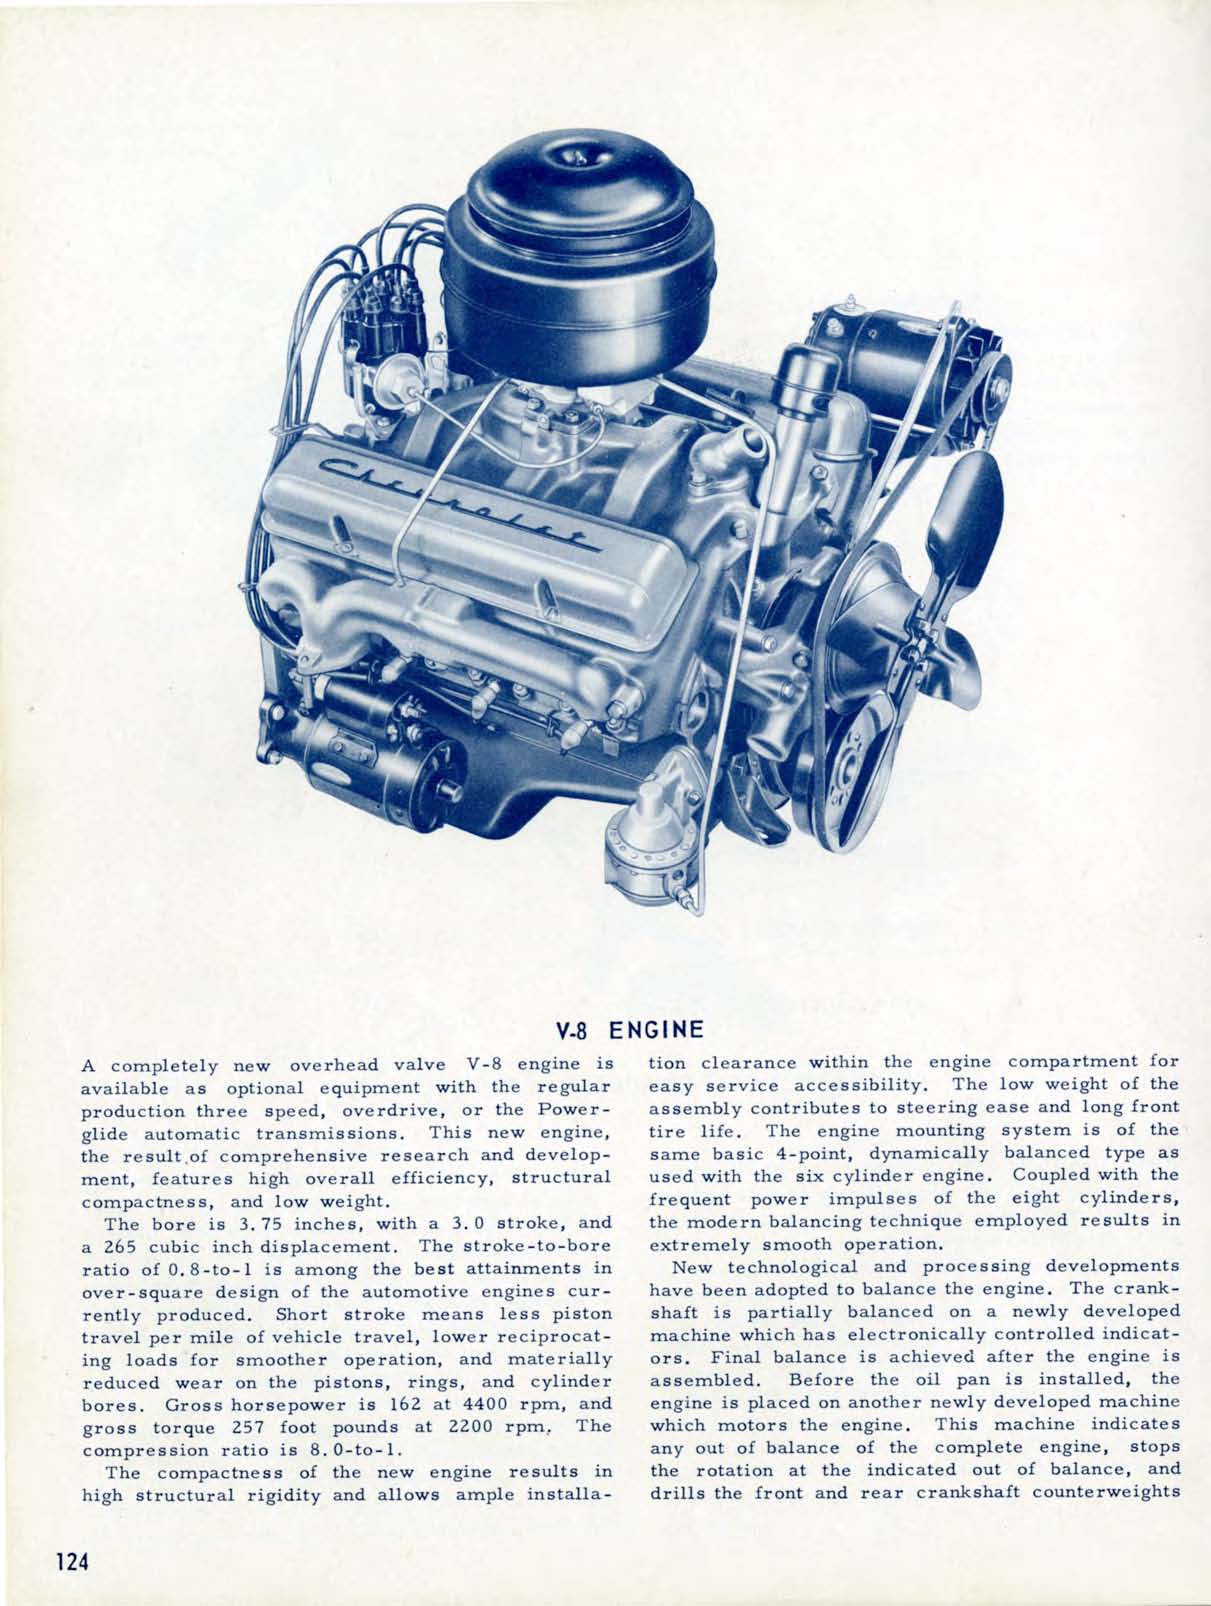 1955_Chevrolet_Engineering_Features-124